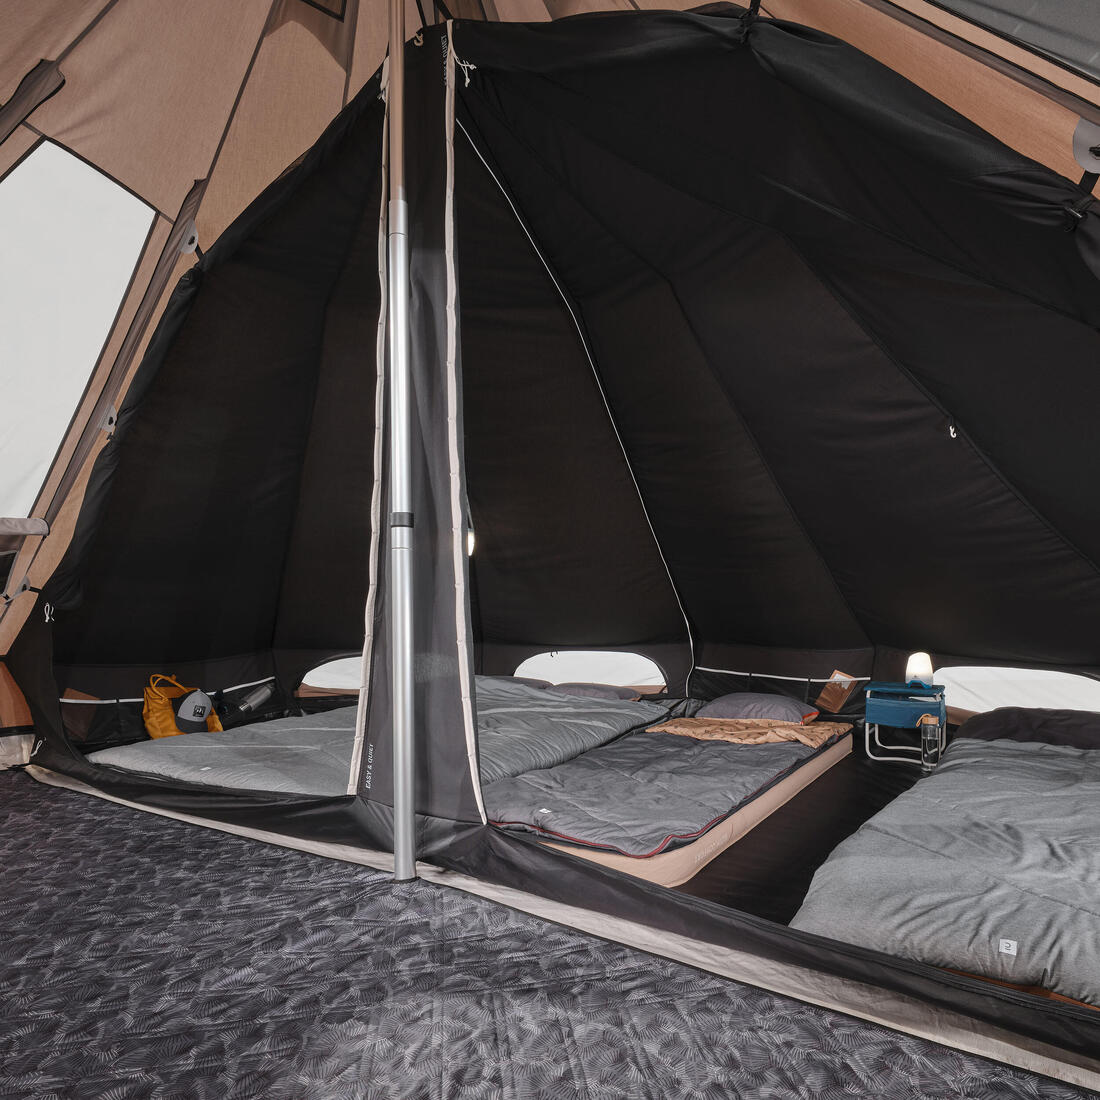 QUECHUA (ケシュア) キャンプ ティピー型テント ポリコットン - 5人用 - 2ルーム